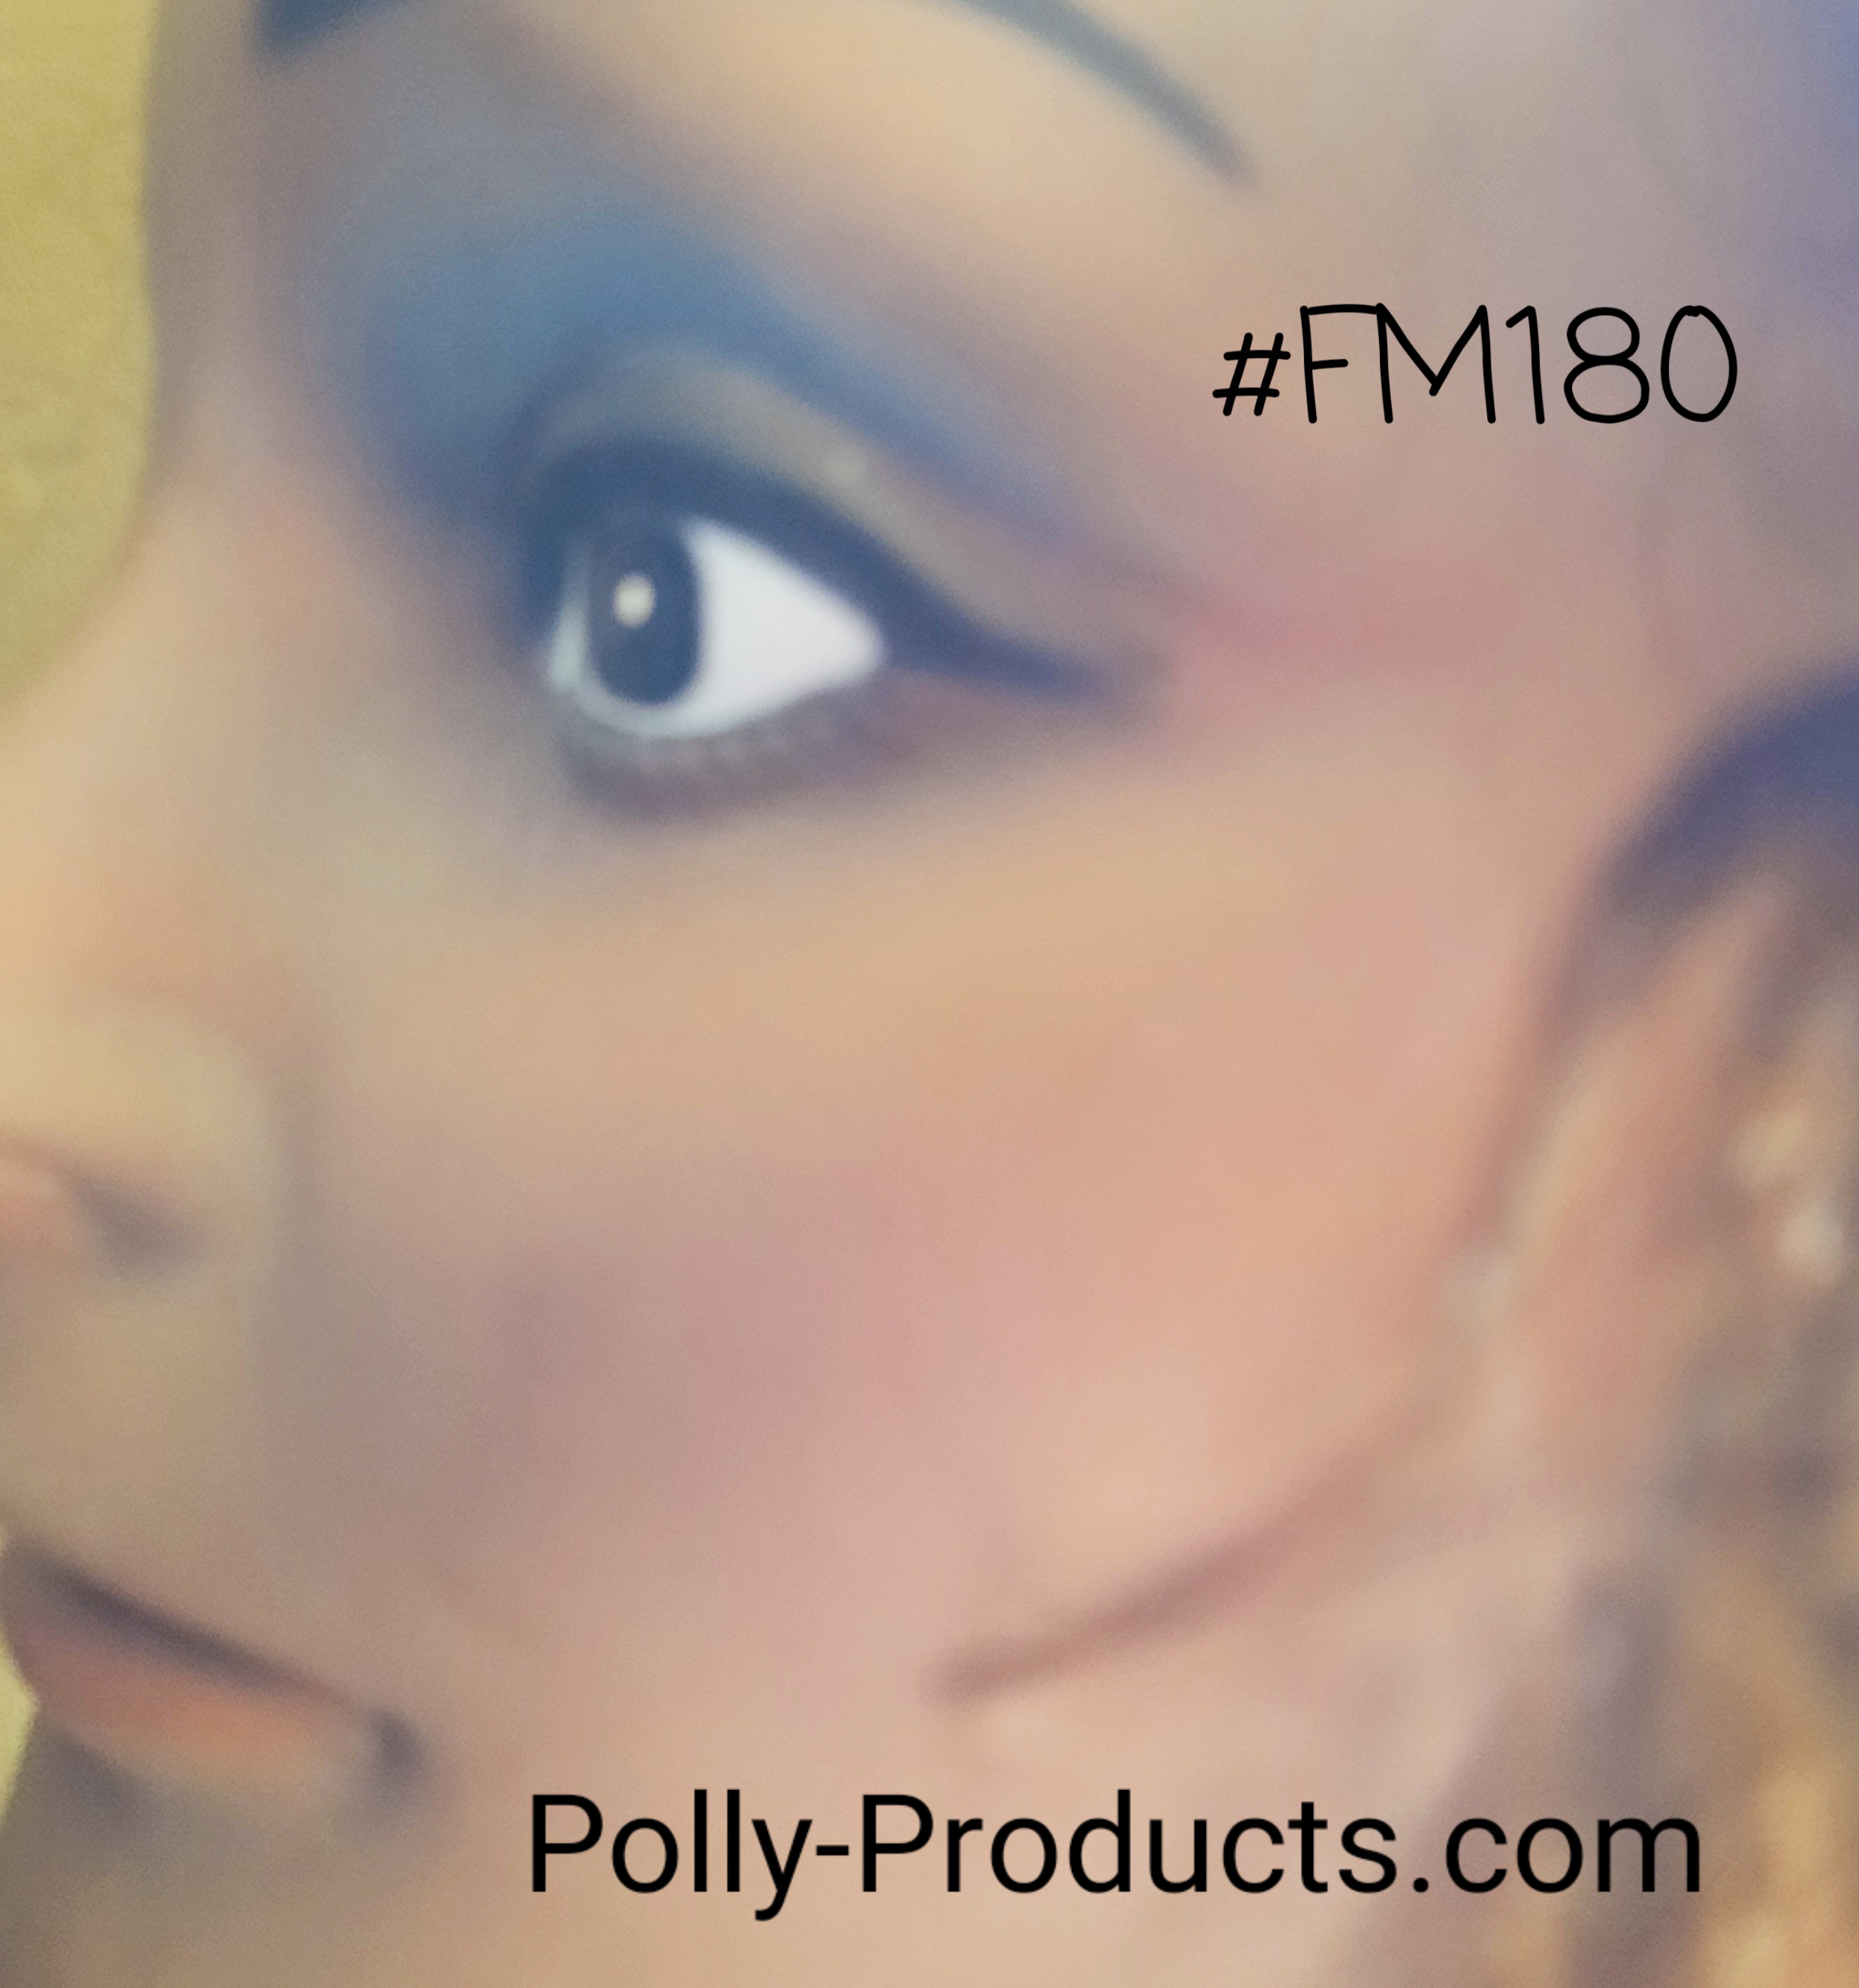 POLLY PRODUCTS COMPANY FEMALE #FM180 DARK-SKIN TONE HEAD FORM WITH WAVY HAIR